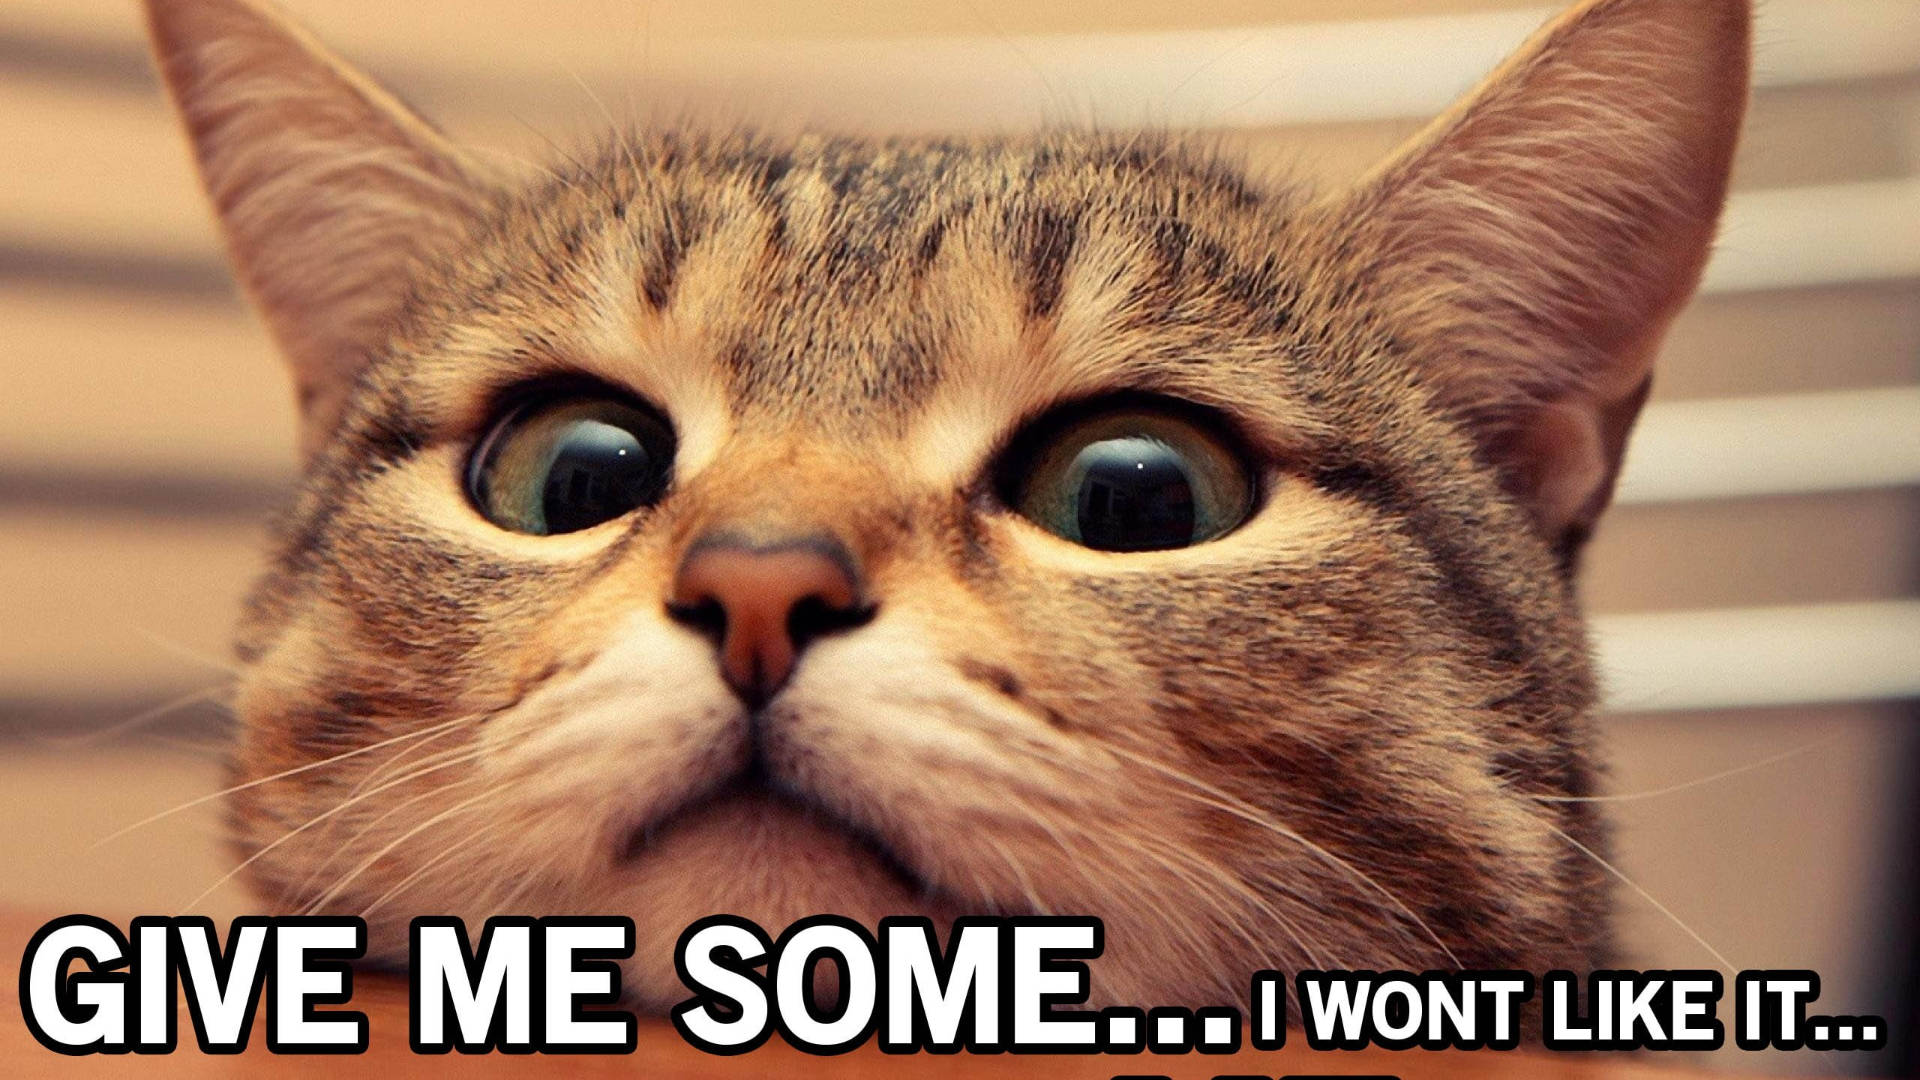 Adorable cat meme wallpaper.